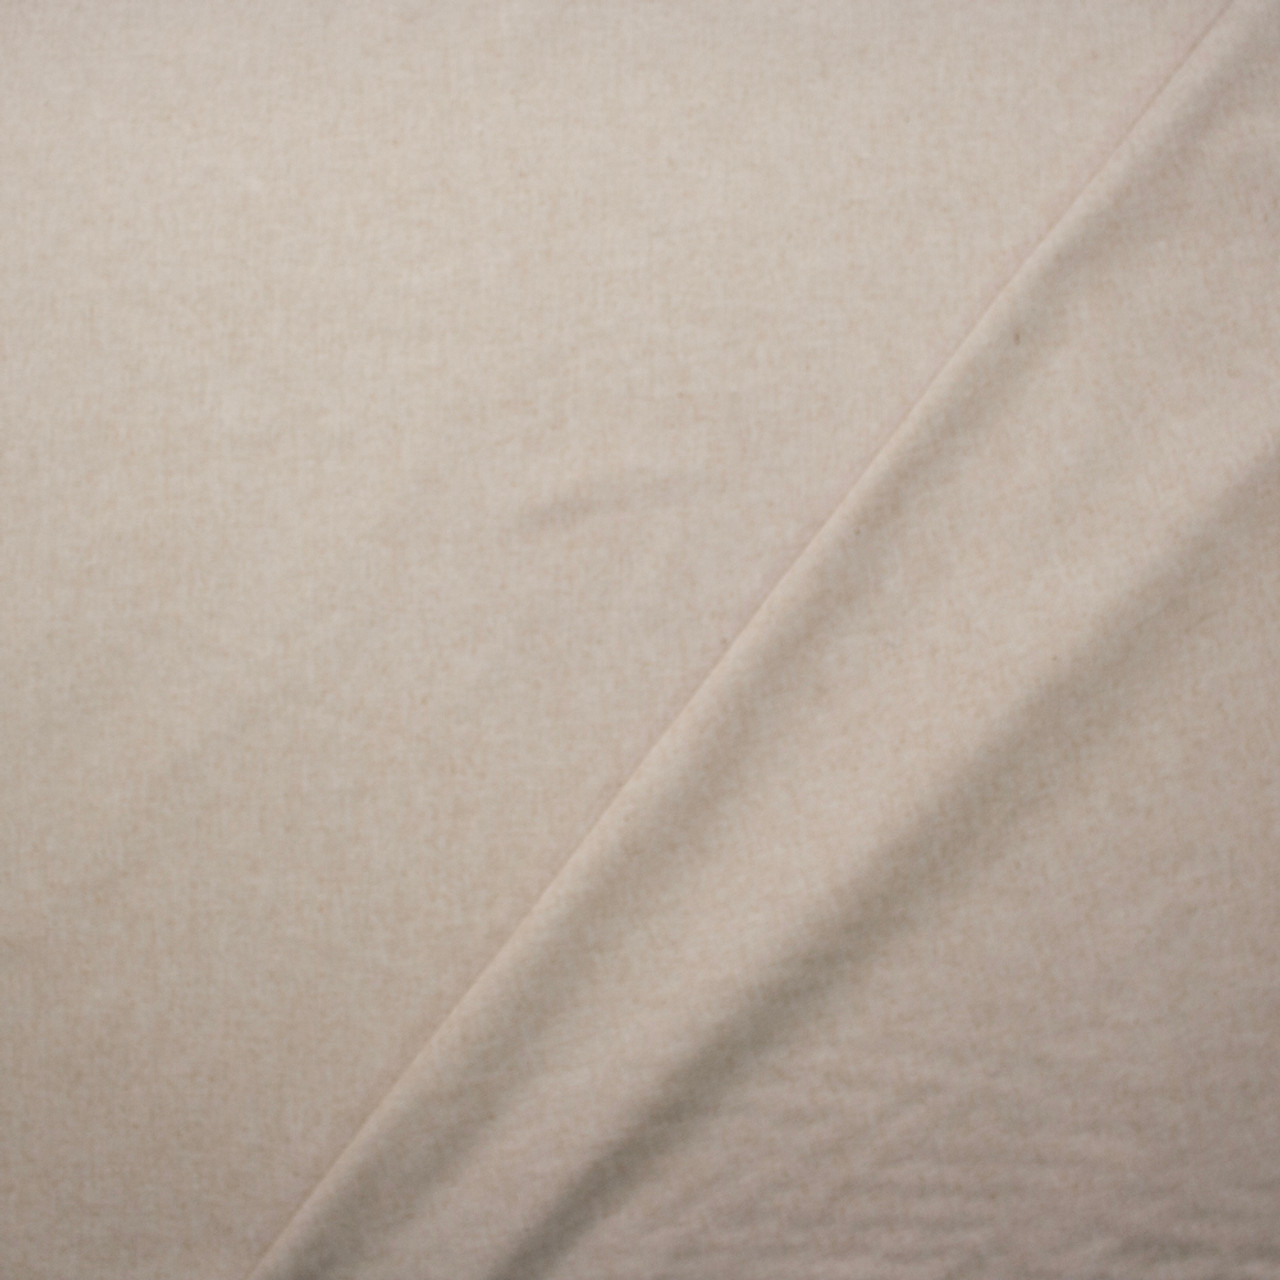 Cali Fabrics Oatmeal Washed Cotton/Linen Blend Duck Canvas Fabric